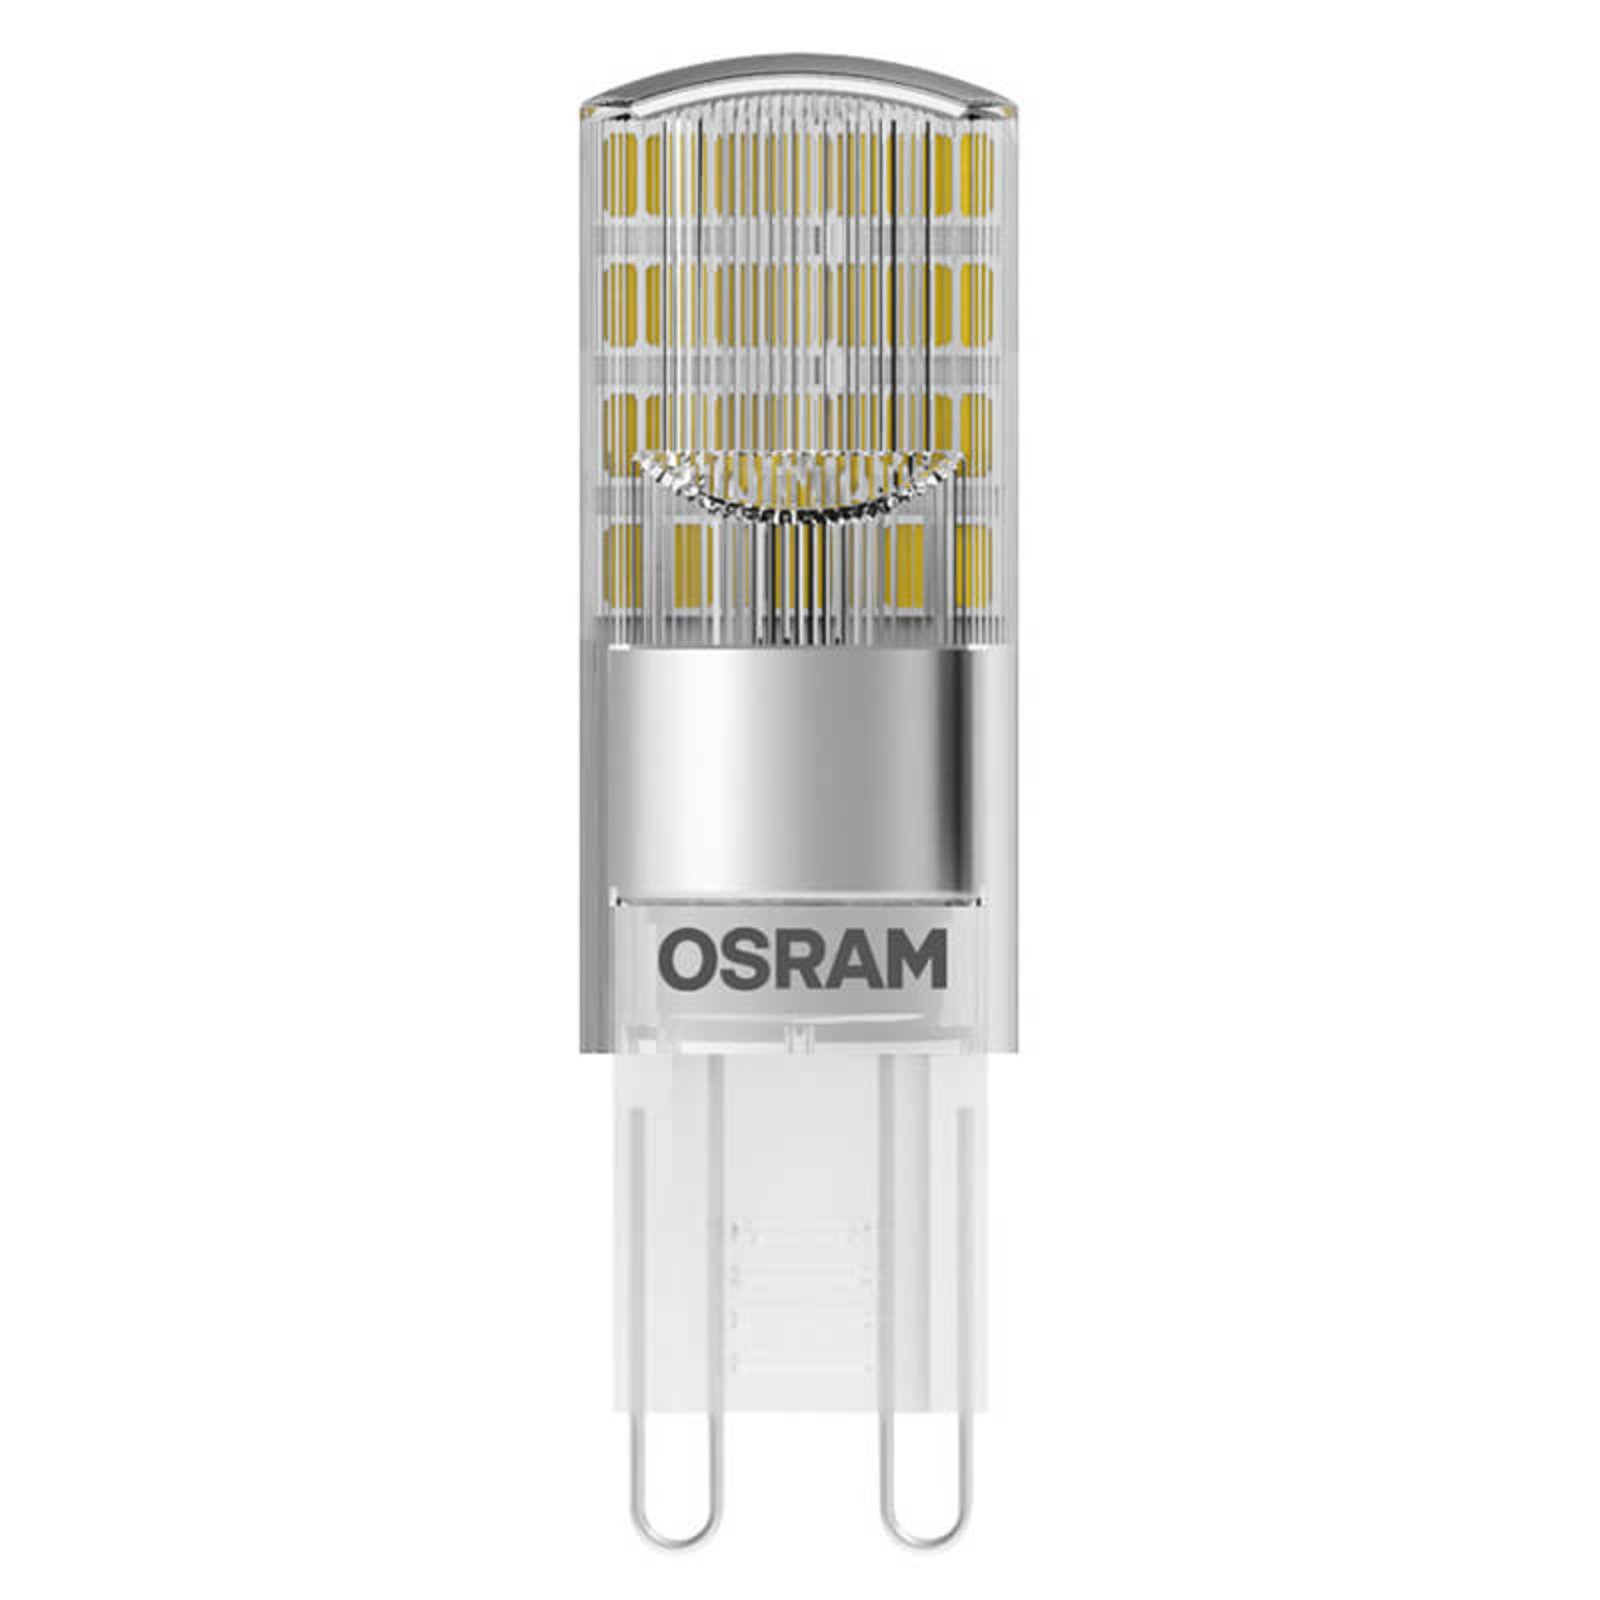 OSRAM LED stiftlamp G9 2,6W, warmwit, 320 lm